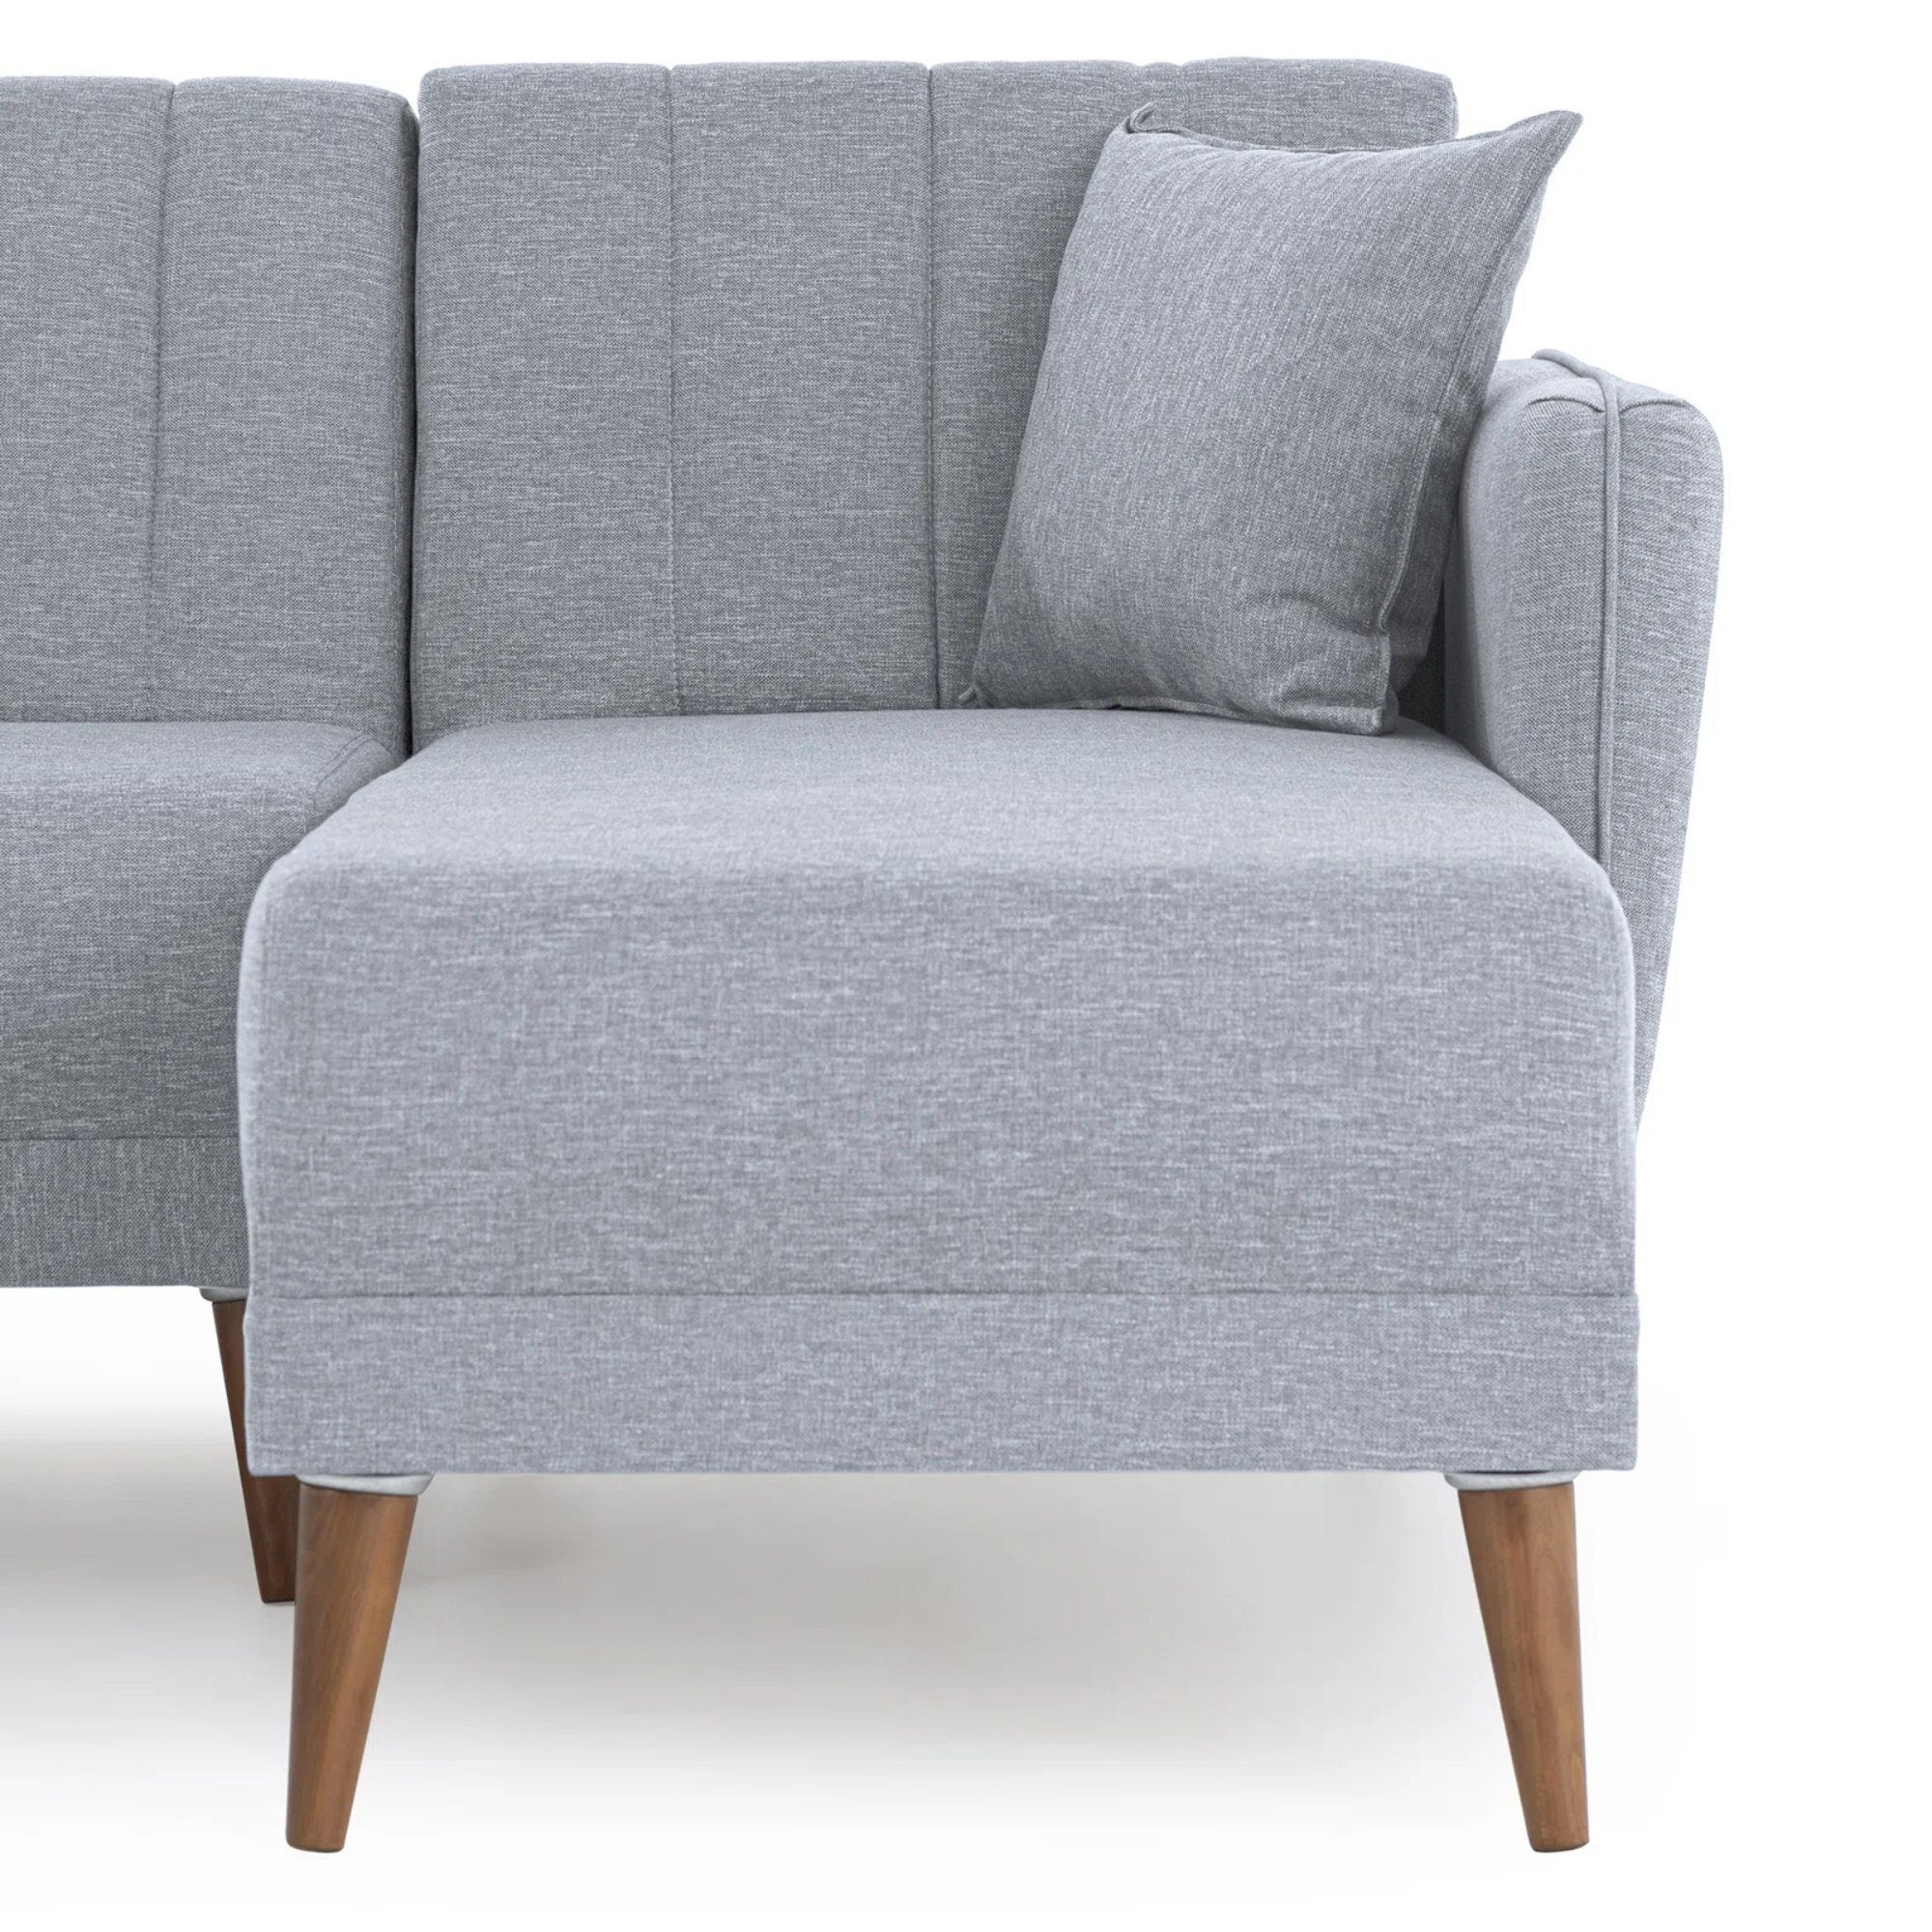 Grau mit 85 cm, Ecksofa 150 Relaxfunktion Gozos Couch, Mammo x 225 Ecksofa, Sitzgruppe Gozos x Bettfunktion